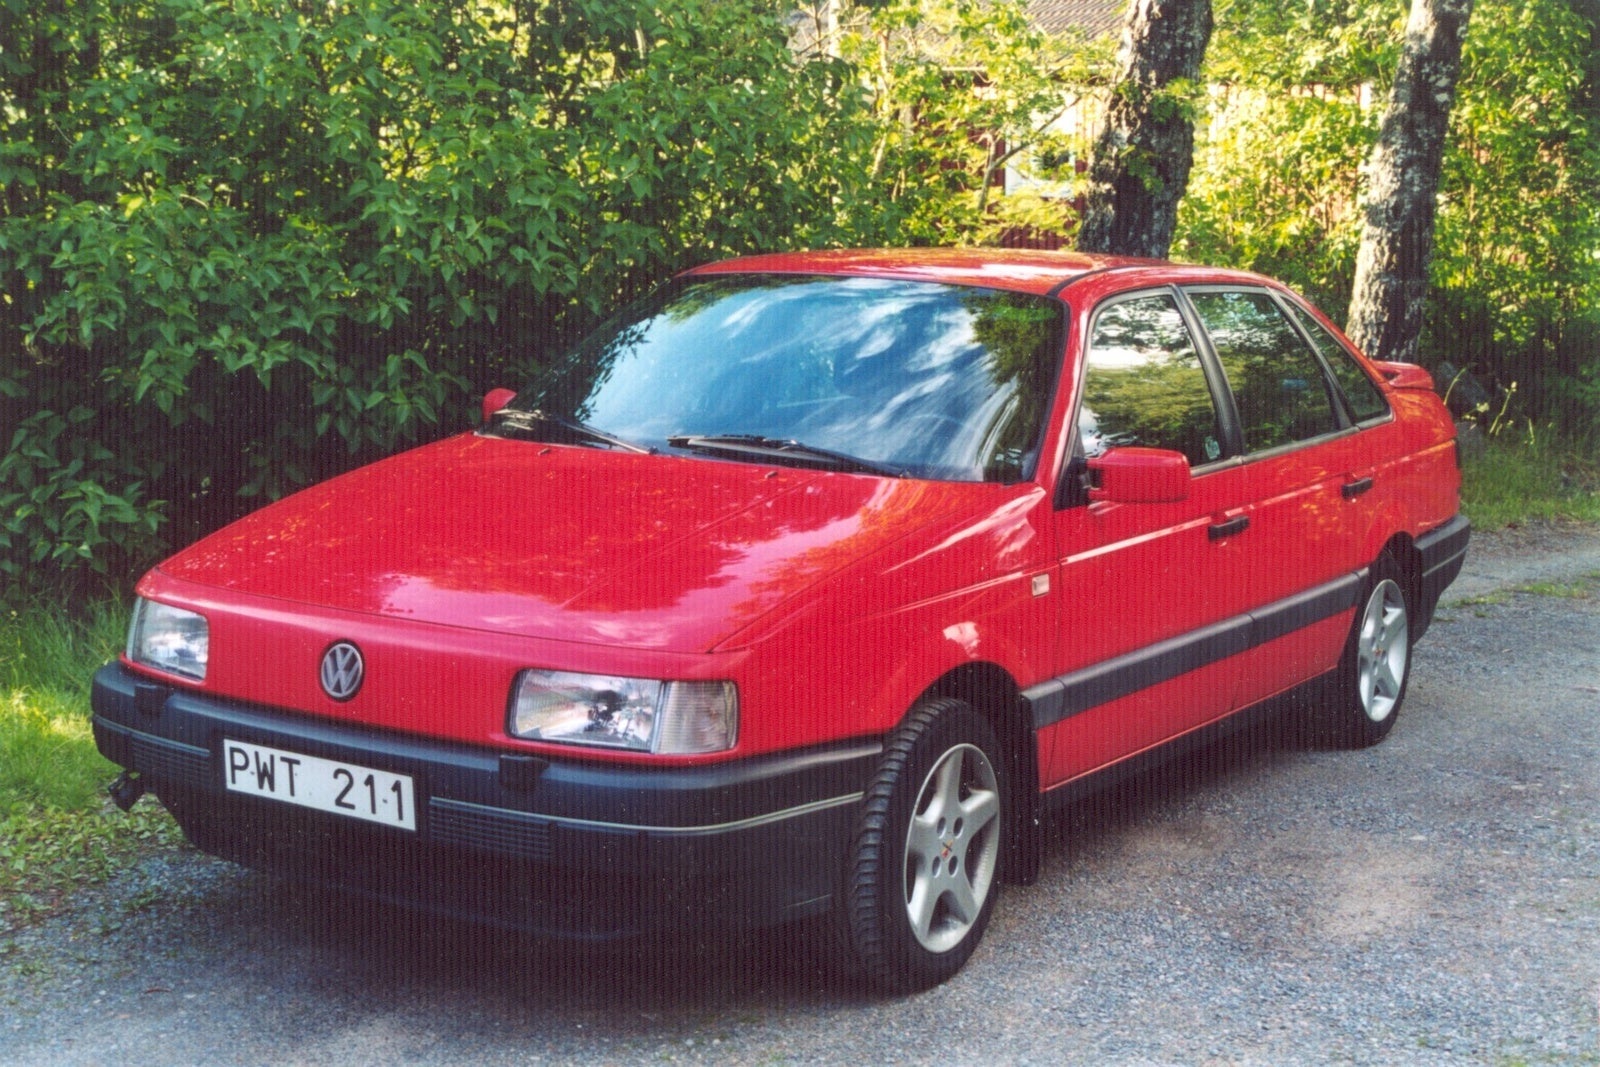 Машину фольксваген пассат б3. Volkswagen Passat b3 седан красный. Фольксваген Пассат 1993. Фольксваген Пассат 1993 красный. Фольксваген Пассат б3 1993.